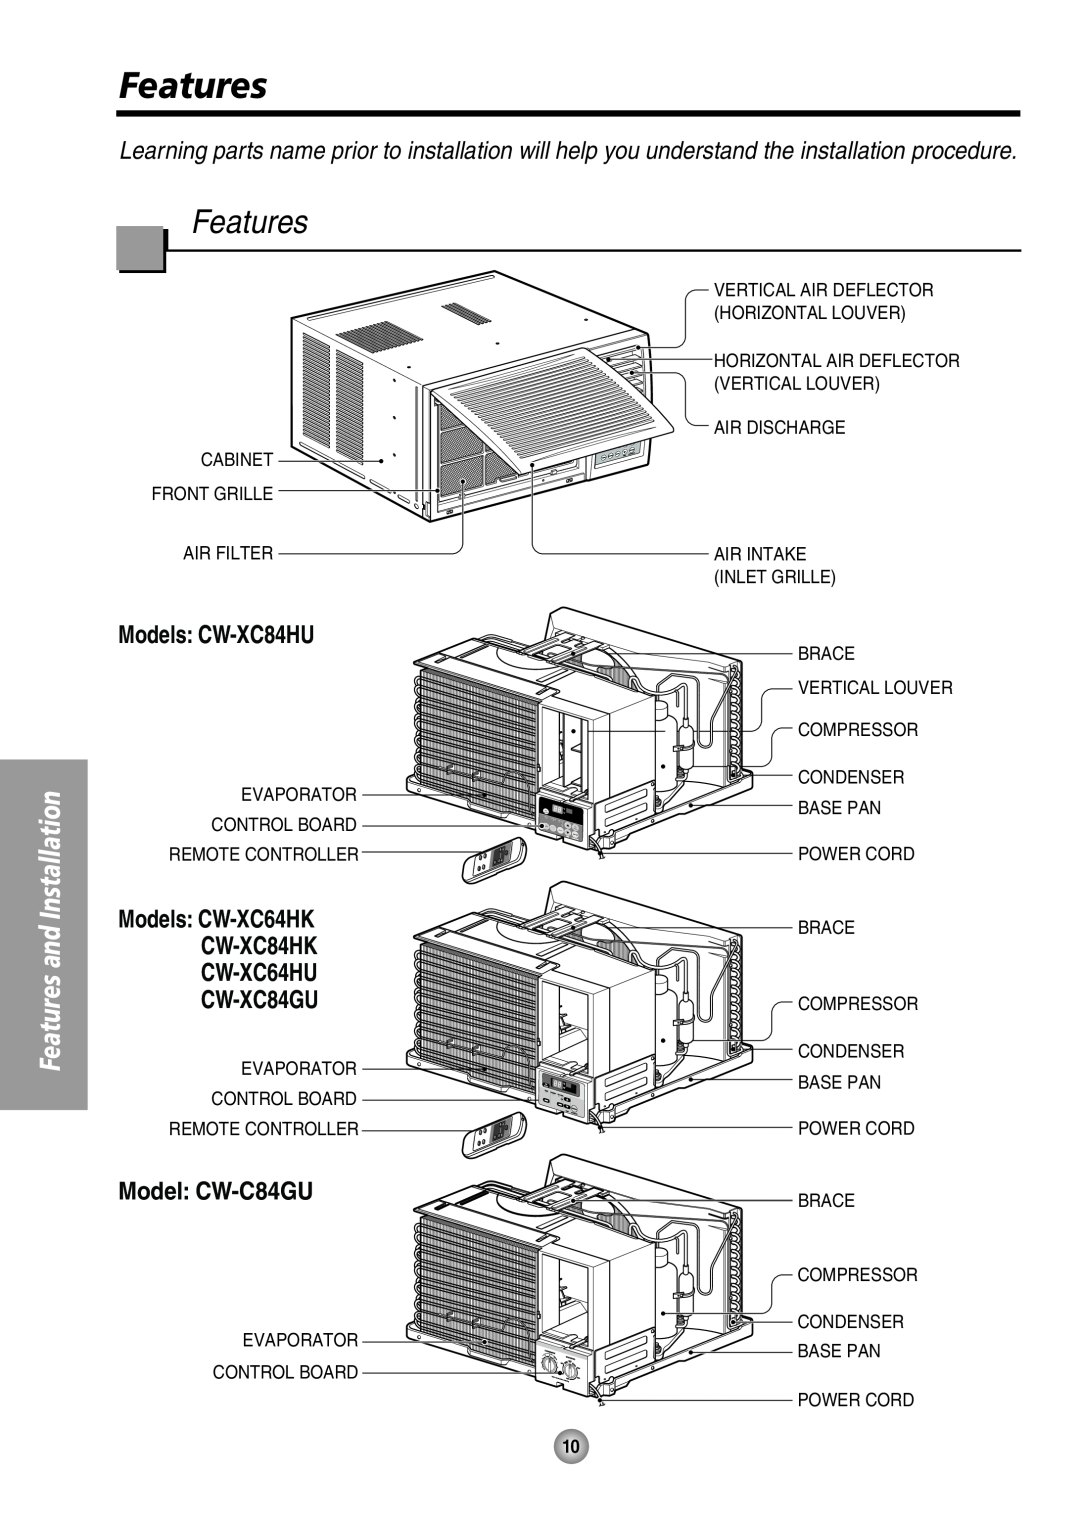 Panasonic manual Features, Models: CW-XC84HU, Models CW-XC64HK CW-XC84HK CW-XC64HU CW-XC84GU, Model CW-C84GU 